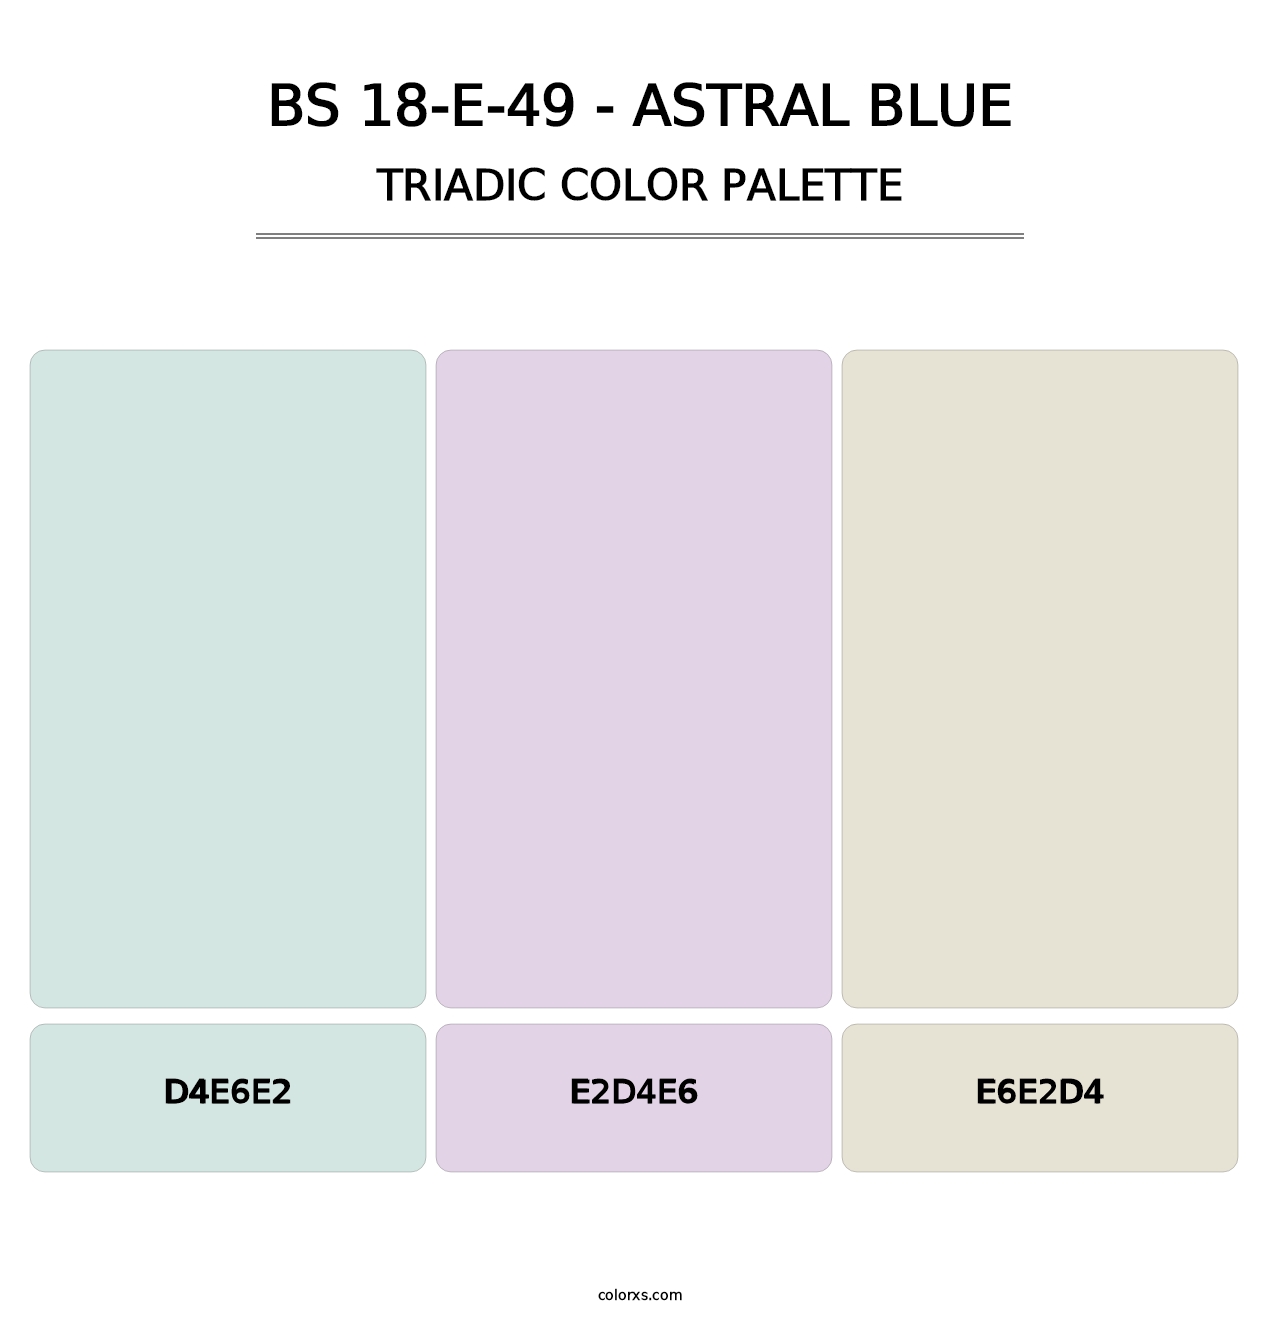 BS 18-E-49 - Astral Blue - Triadic Color Palette